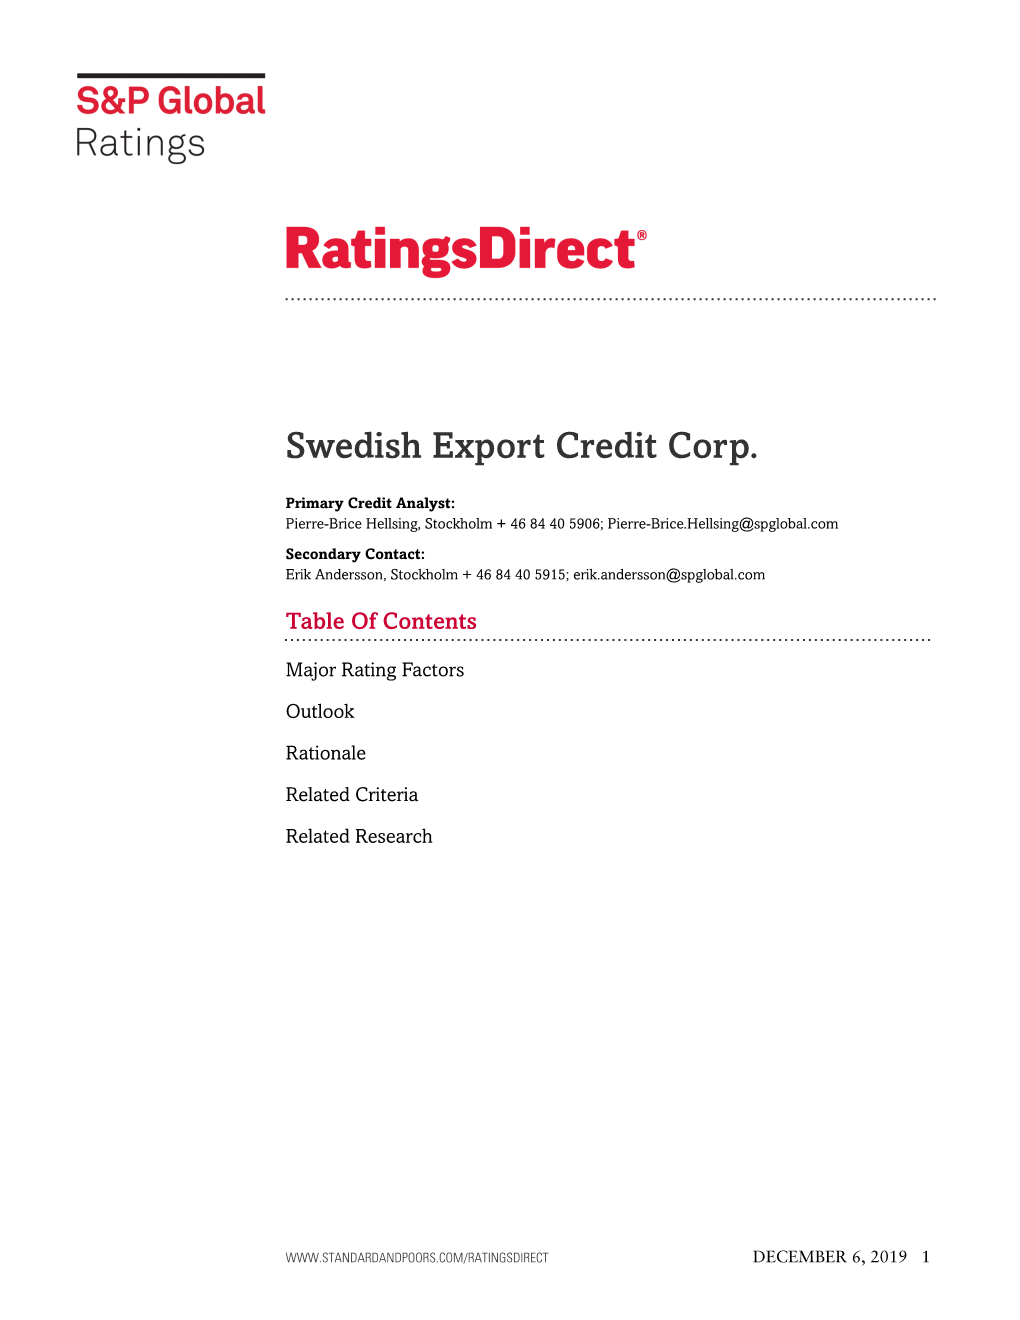 Swedish Export Credit Corp